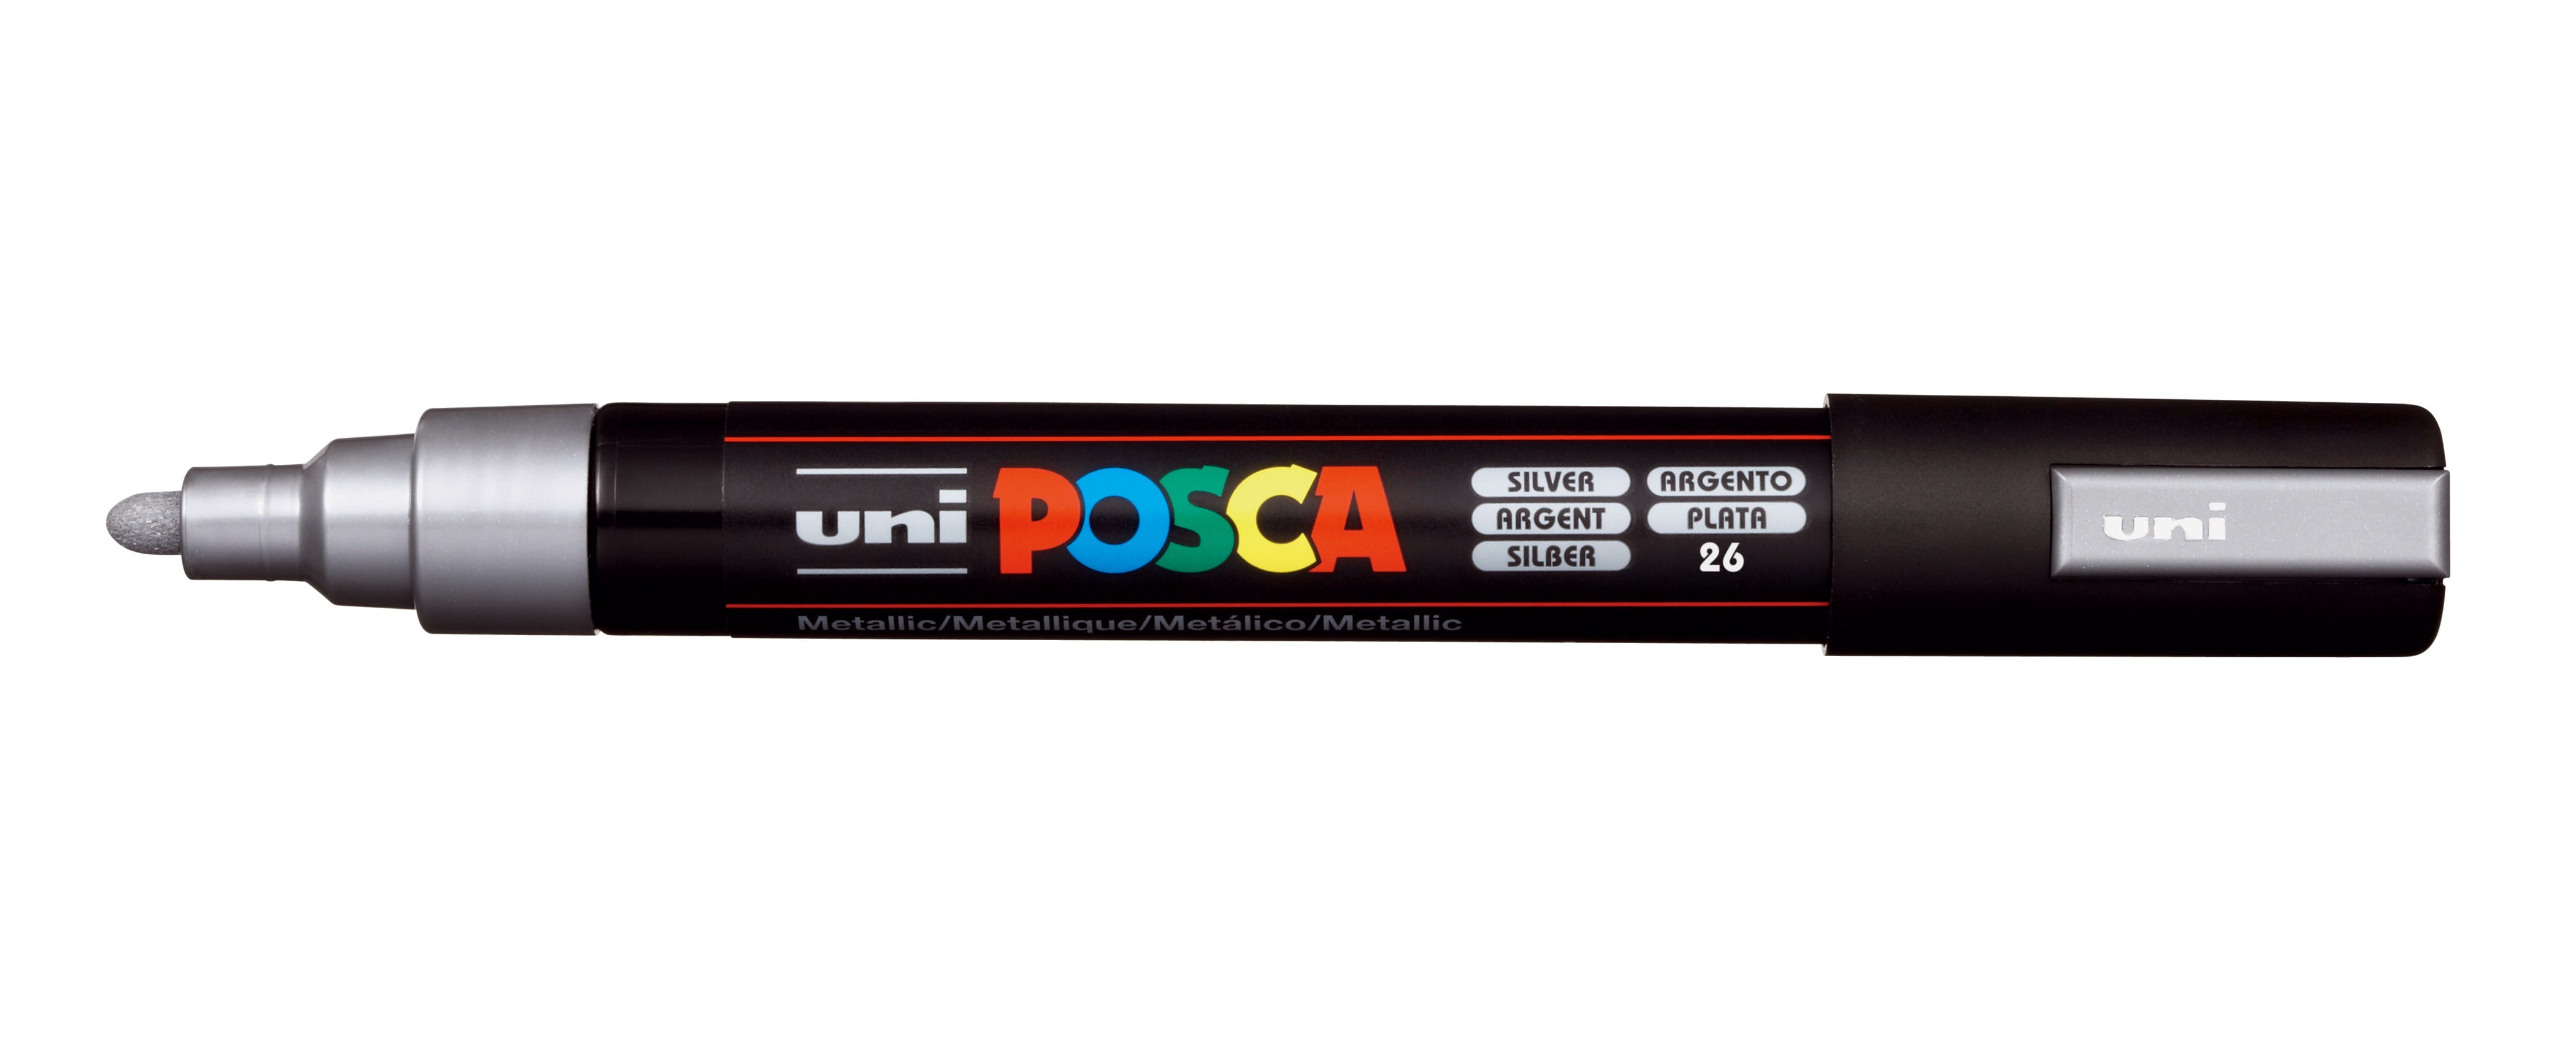 POSCA PC-5M Paint Marker Pens Medium Bullet tipped 1.8 mm - 2.5 mm Multiple Options-41